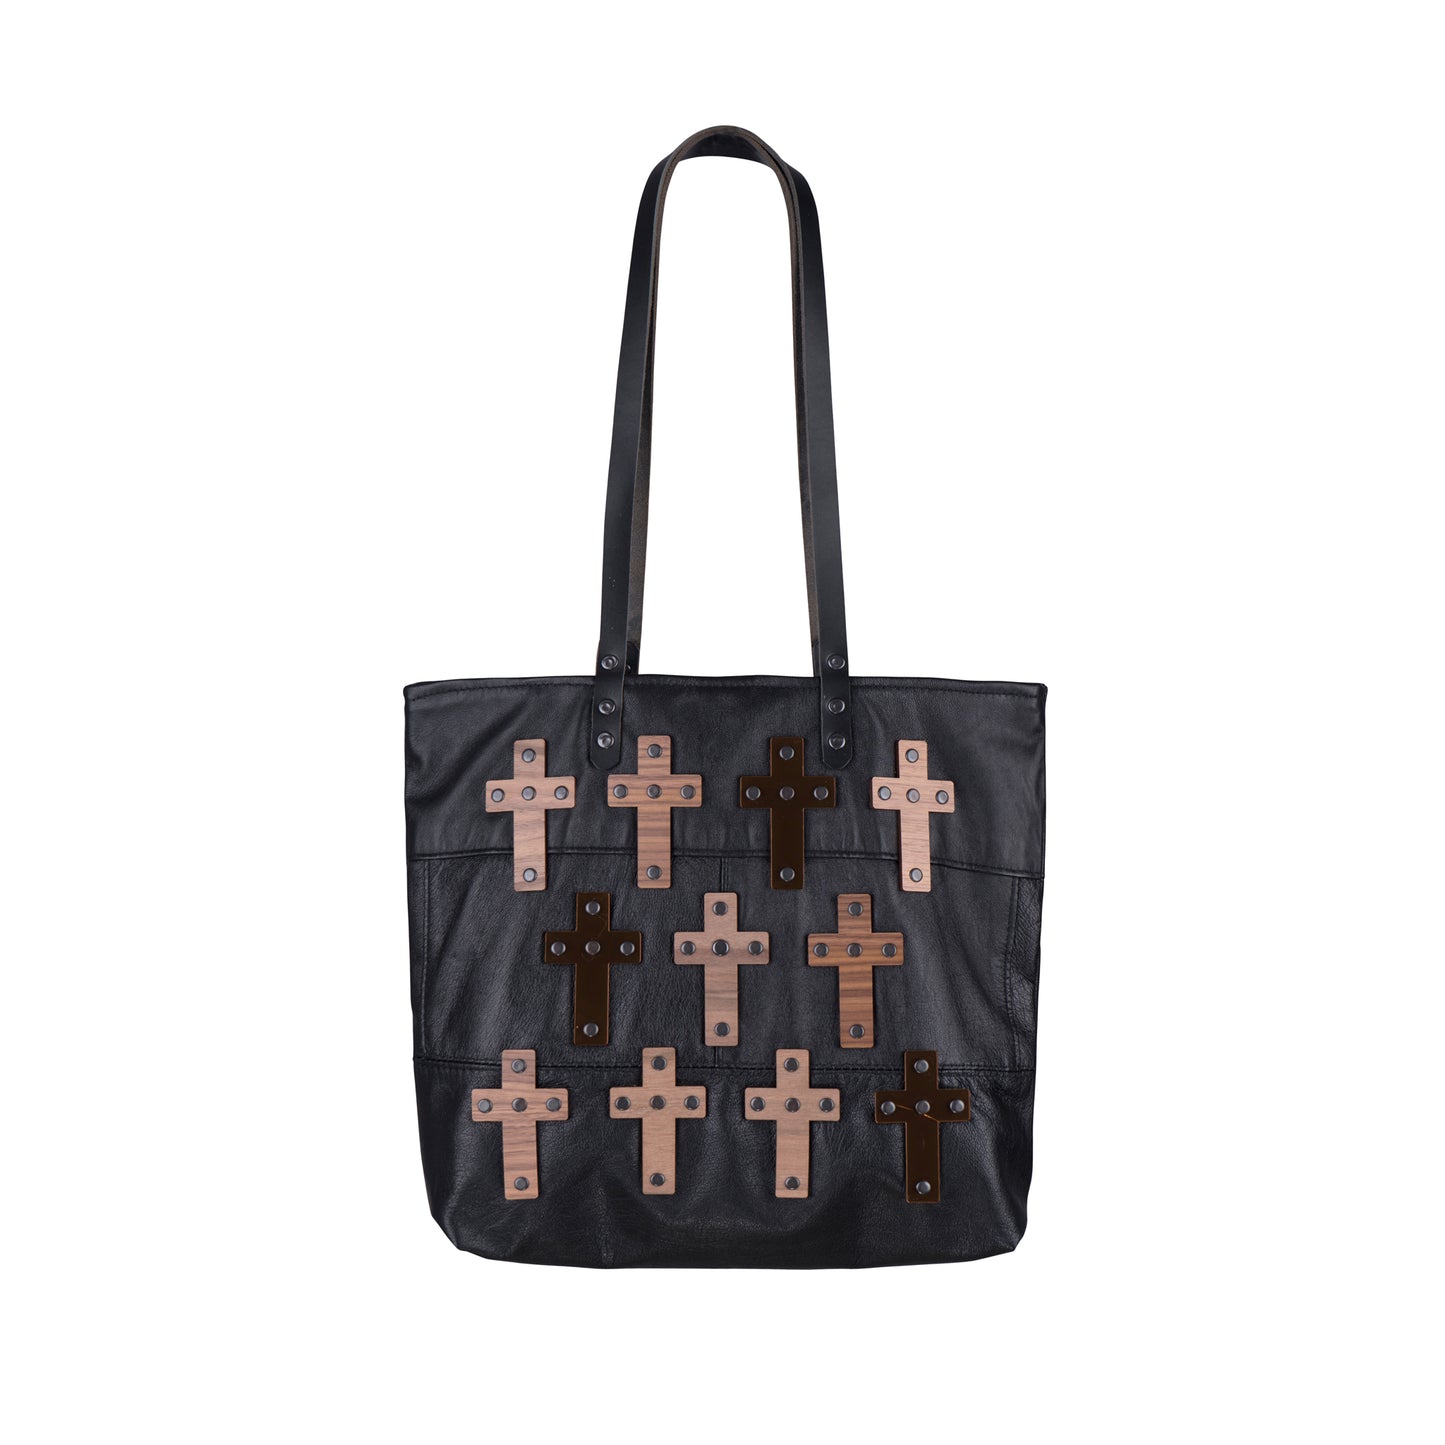 METANoIA The Cross Black recycled leather medium handbag with cross shaped bamboo, walnut and metallic acrylic forms.